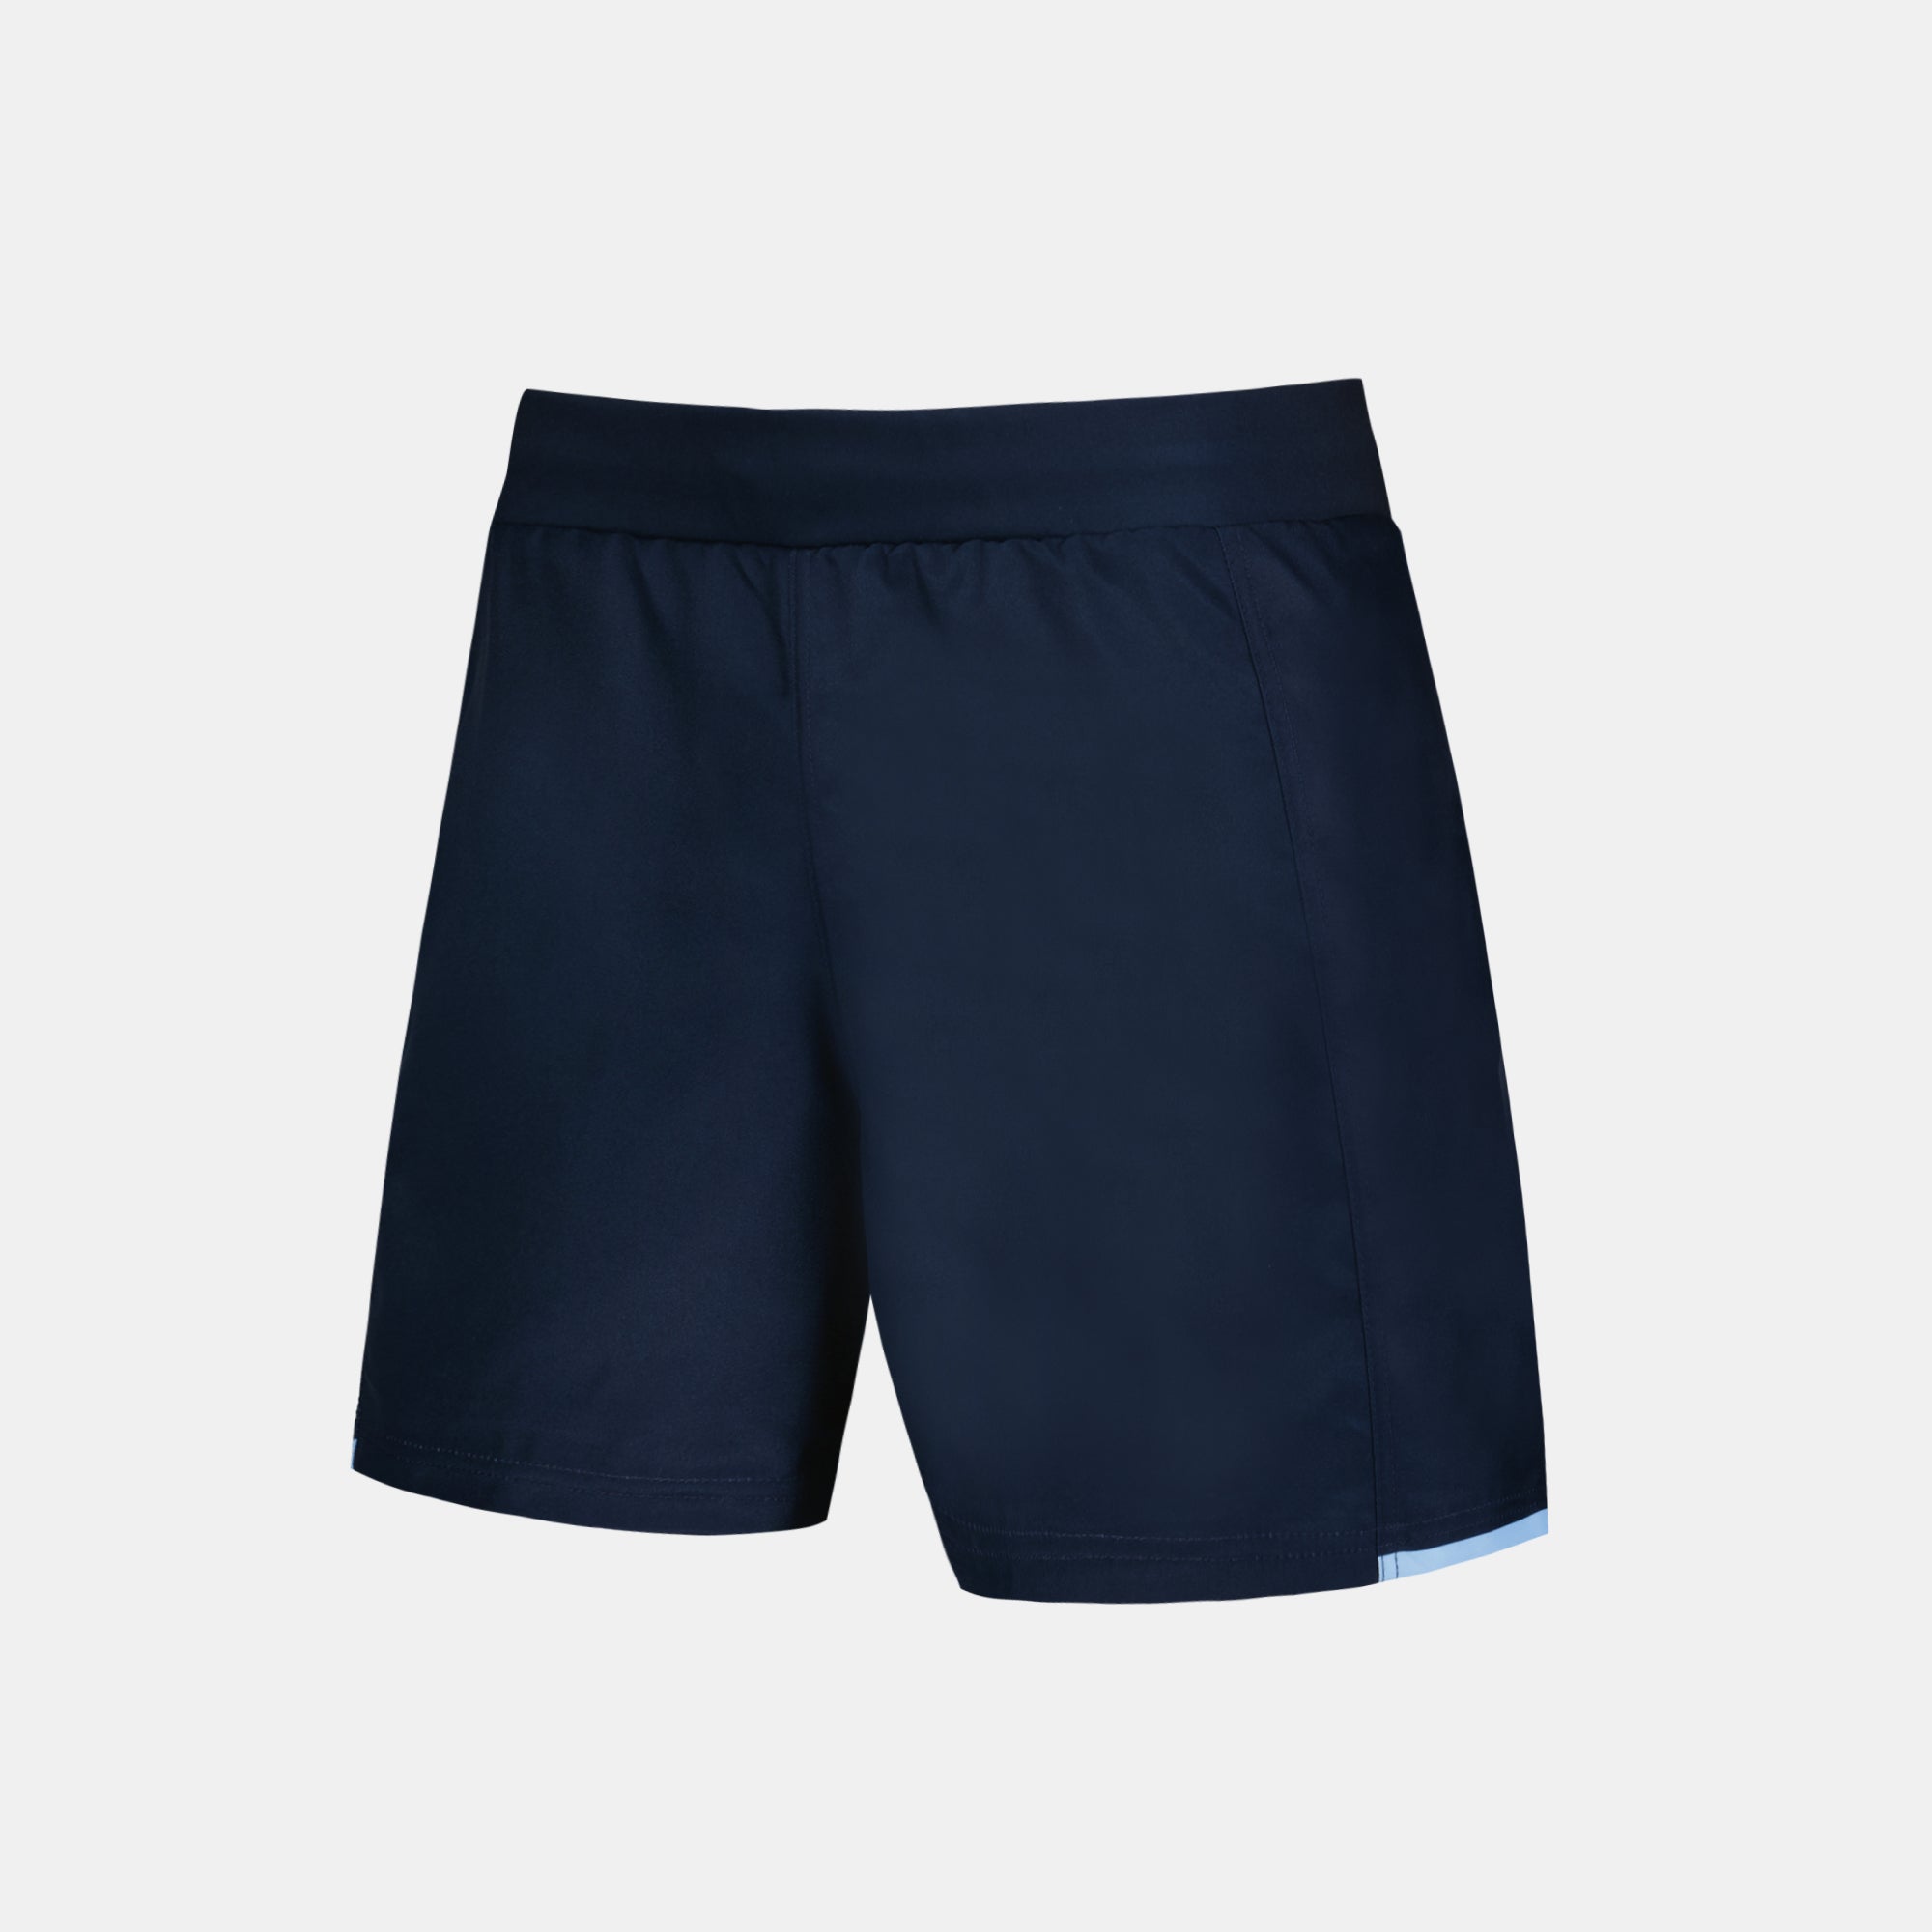 2320309-AB REPLICA Short M blue navy  | Shorts for men